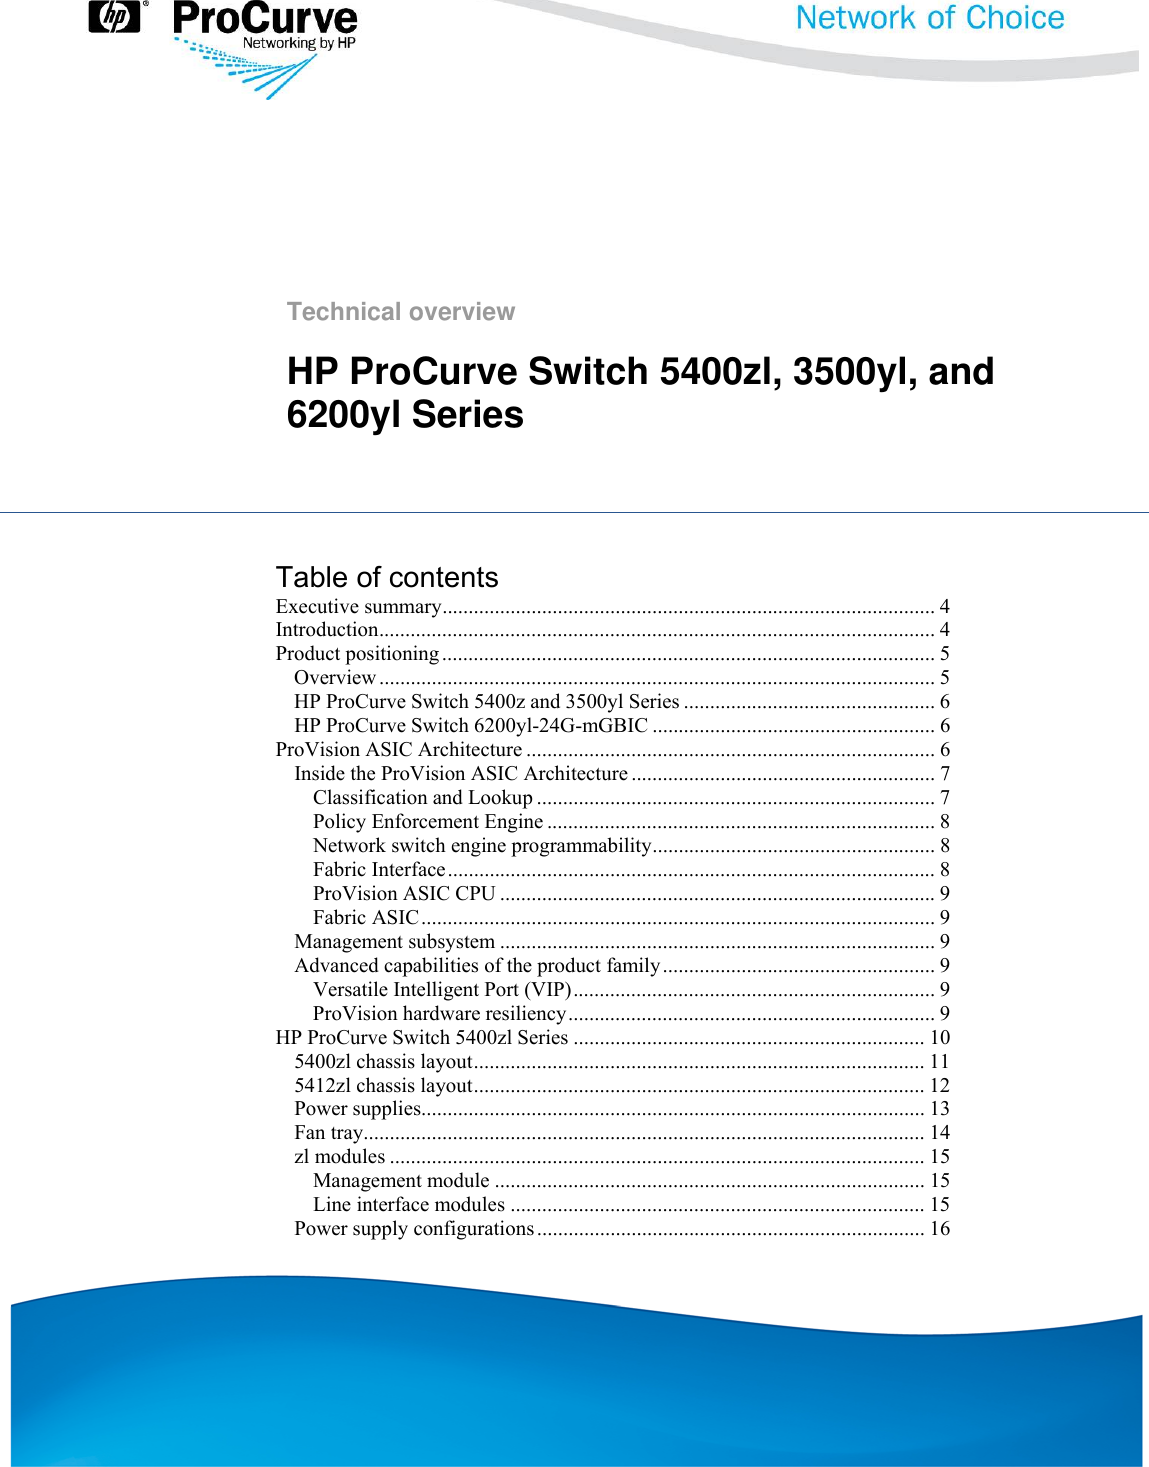 Hp Procurve Switch Comparison Chart